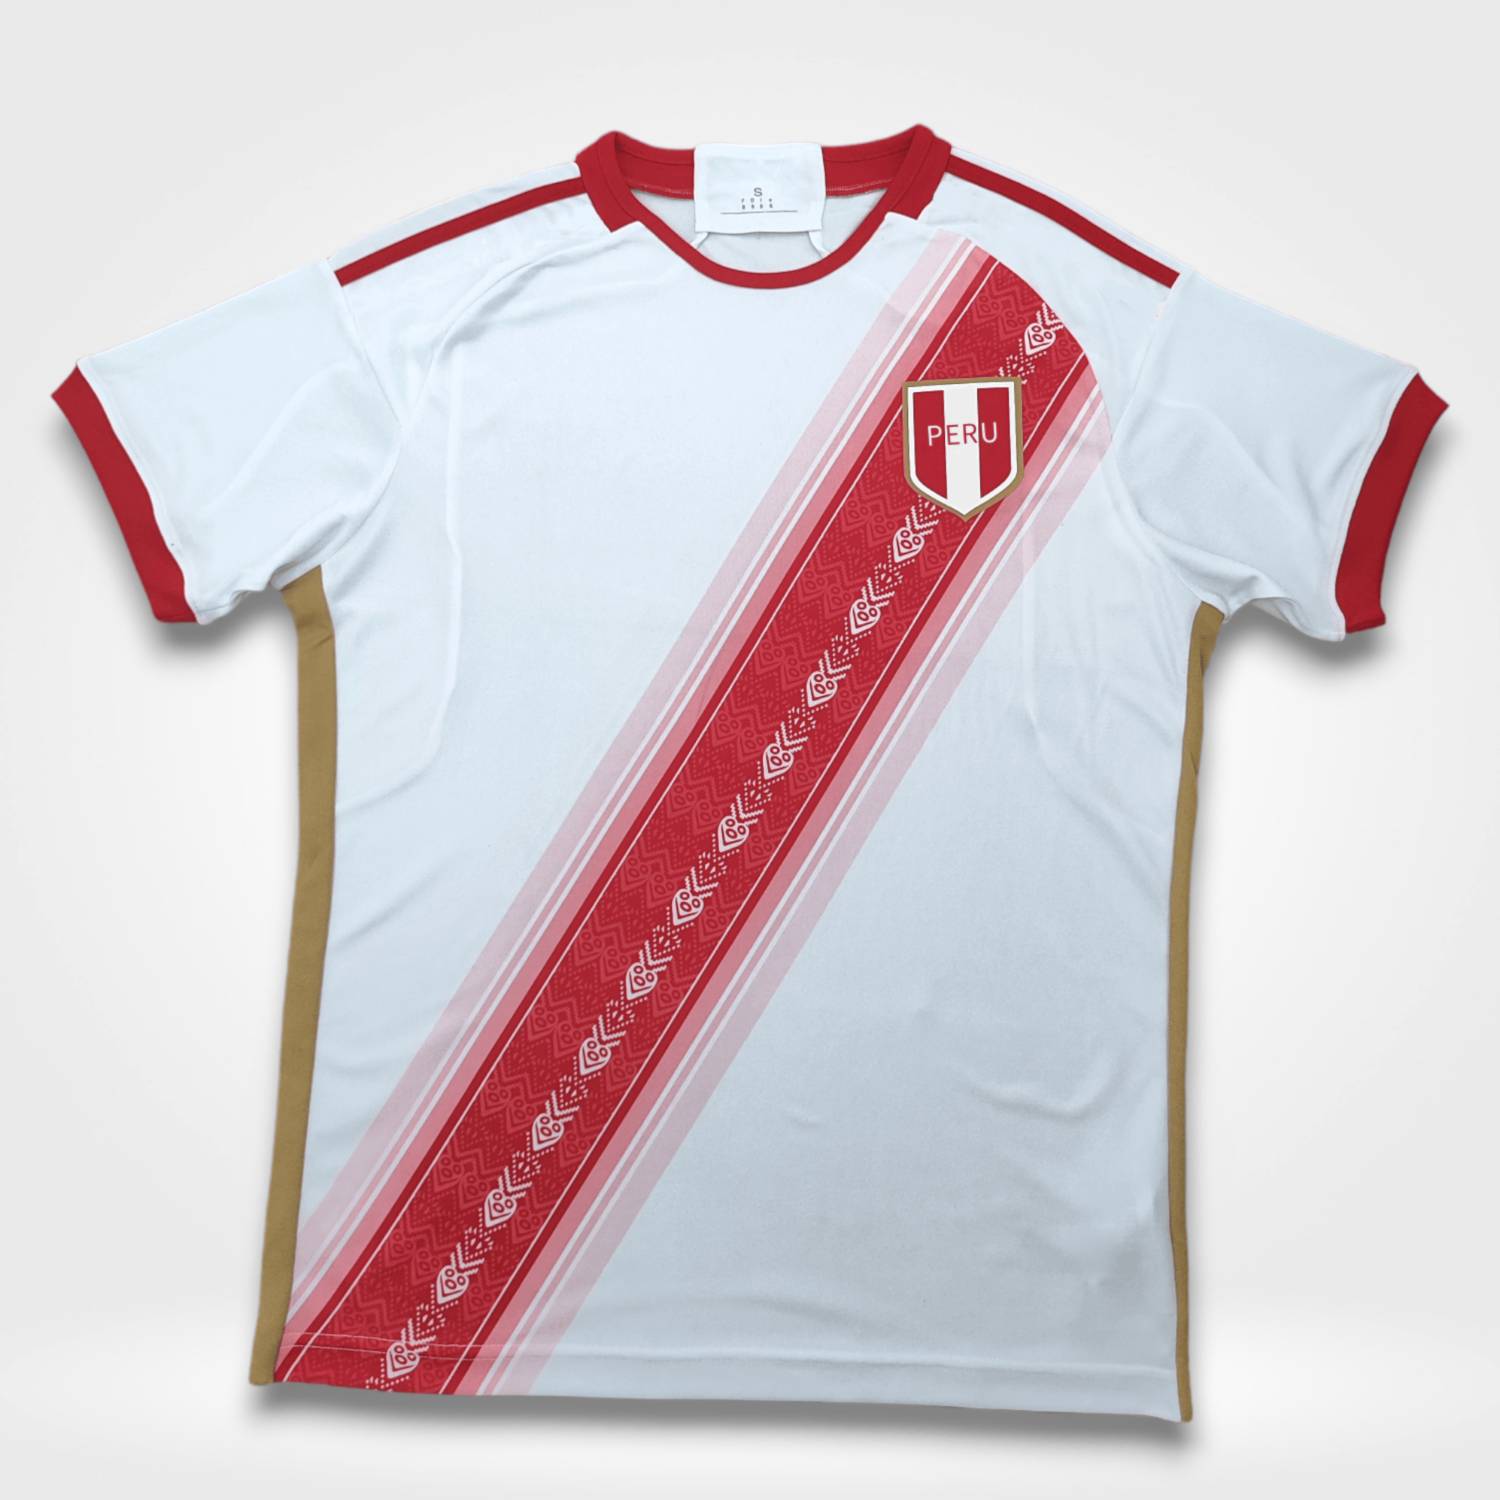 Camisetas Equipación de Fútbol para Adulto Cuello Redondo